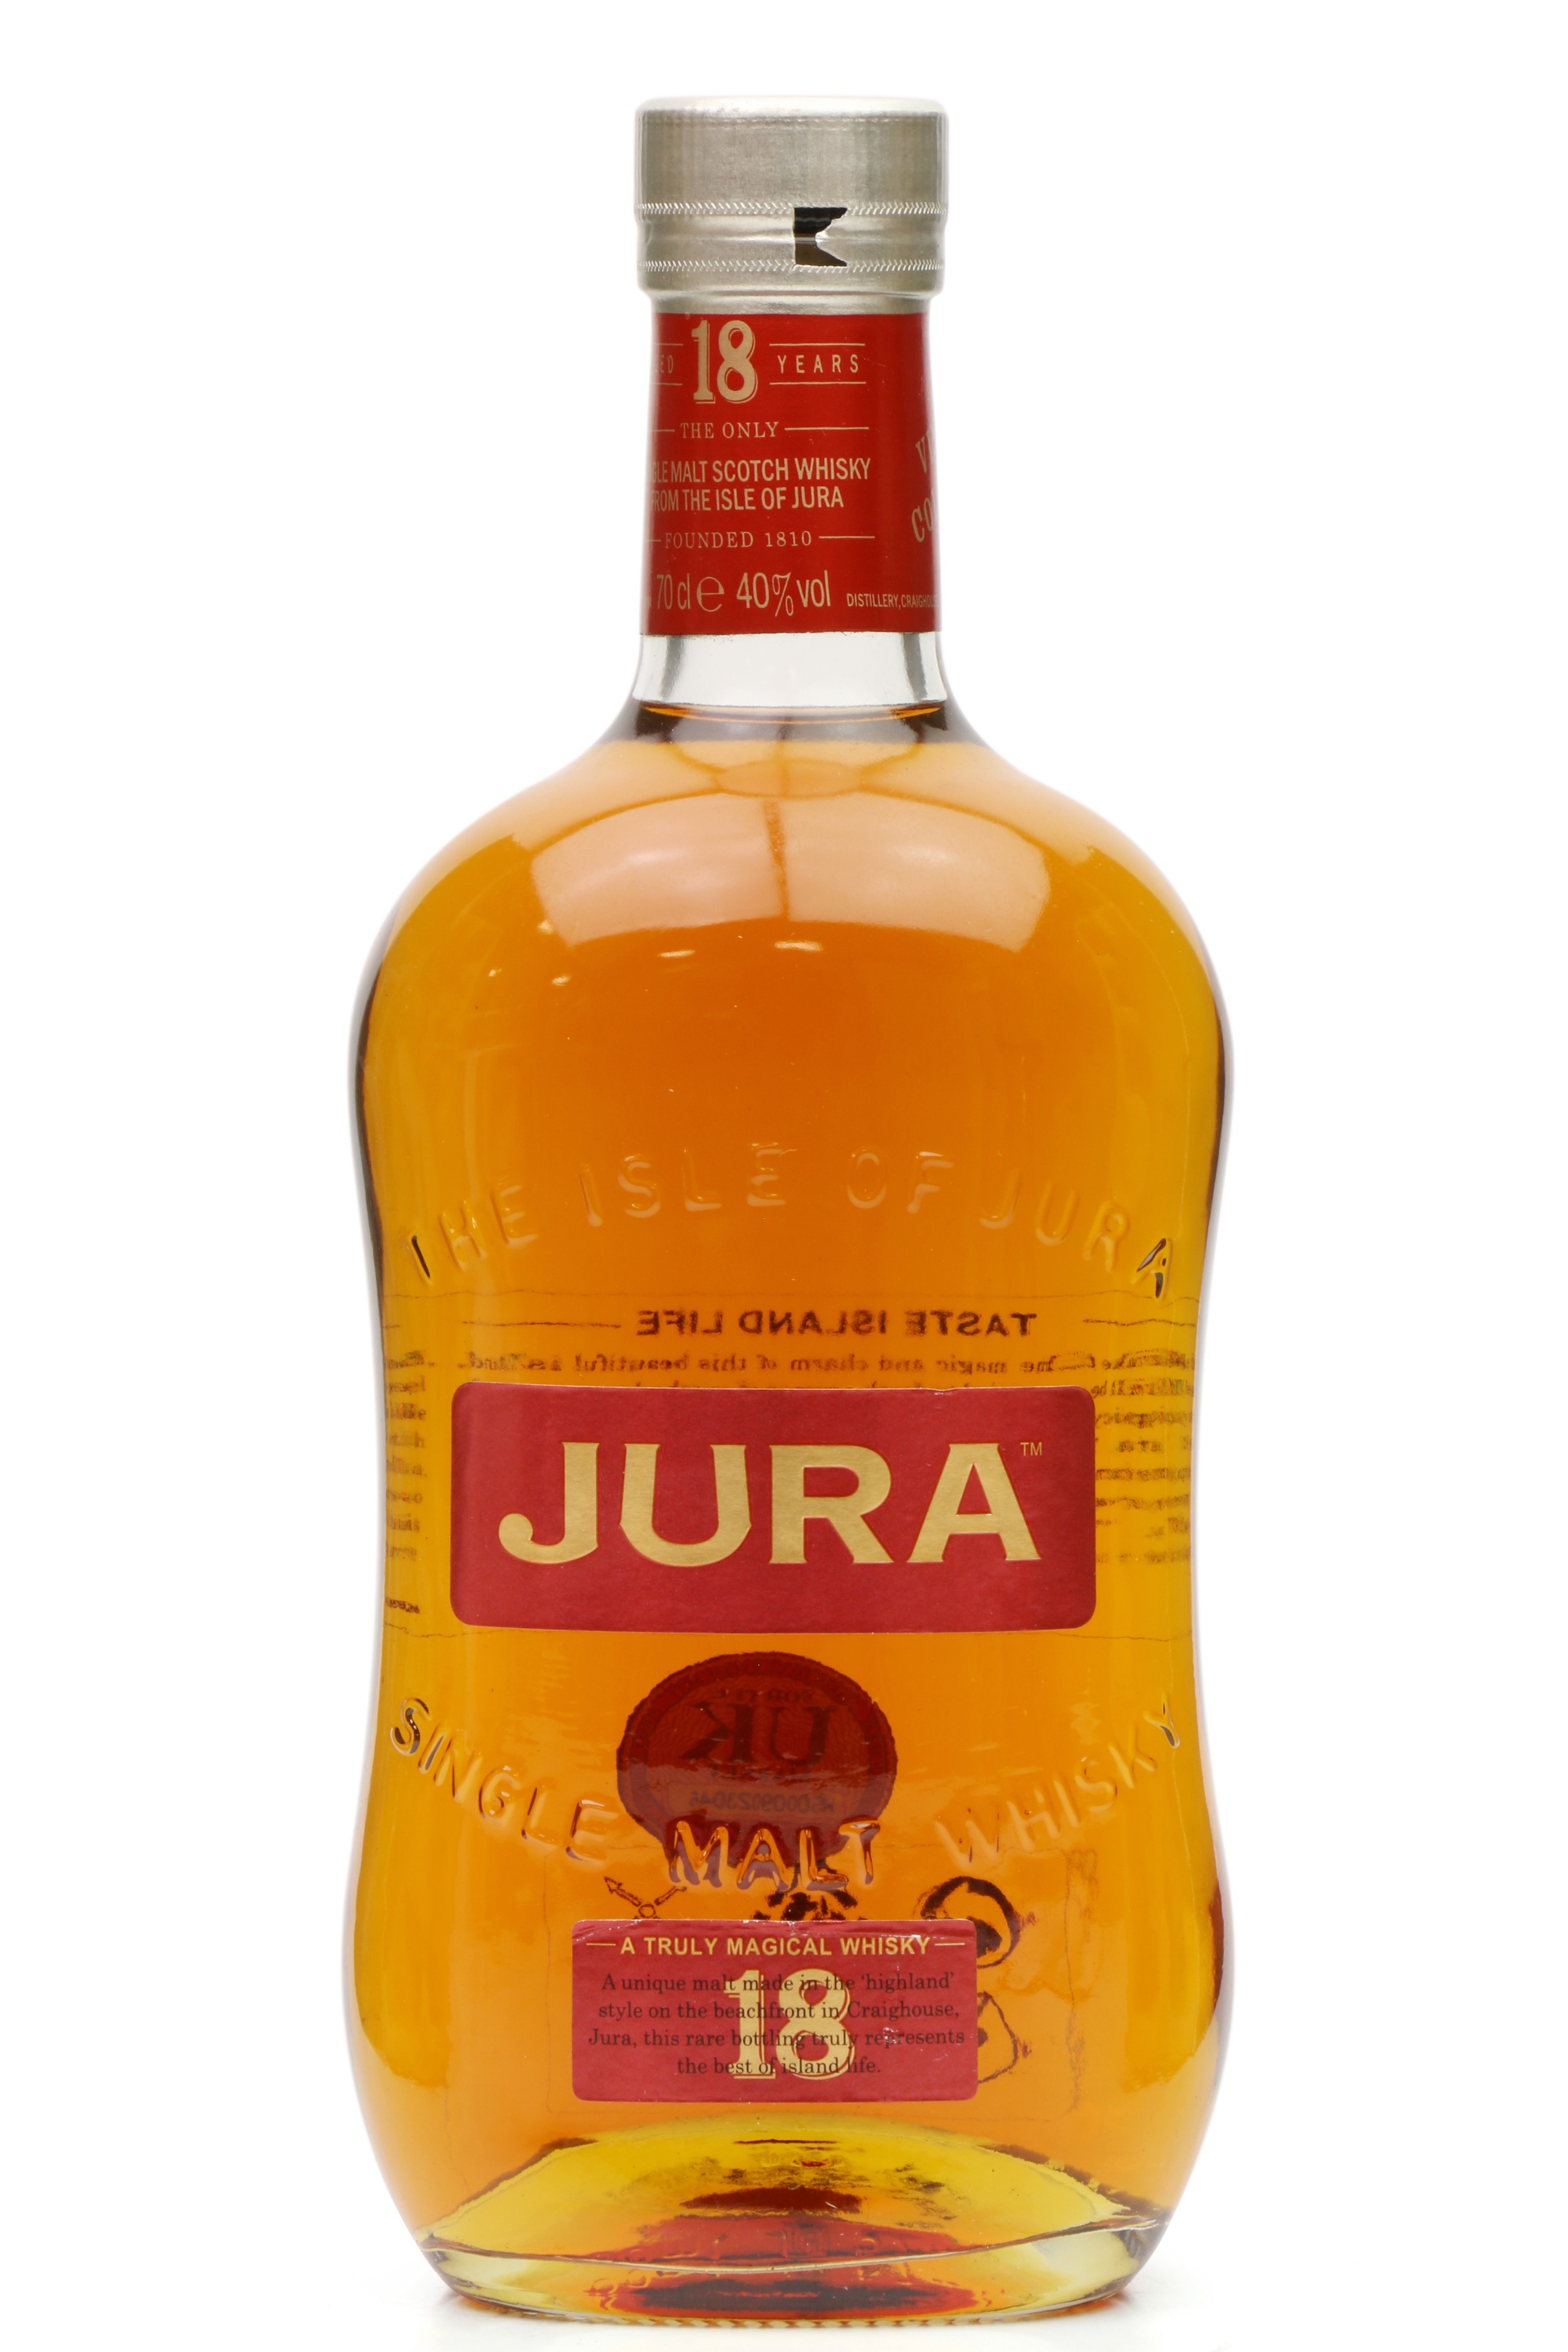 Jura 18 Year Single Malt Scotch Whisky